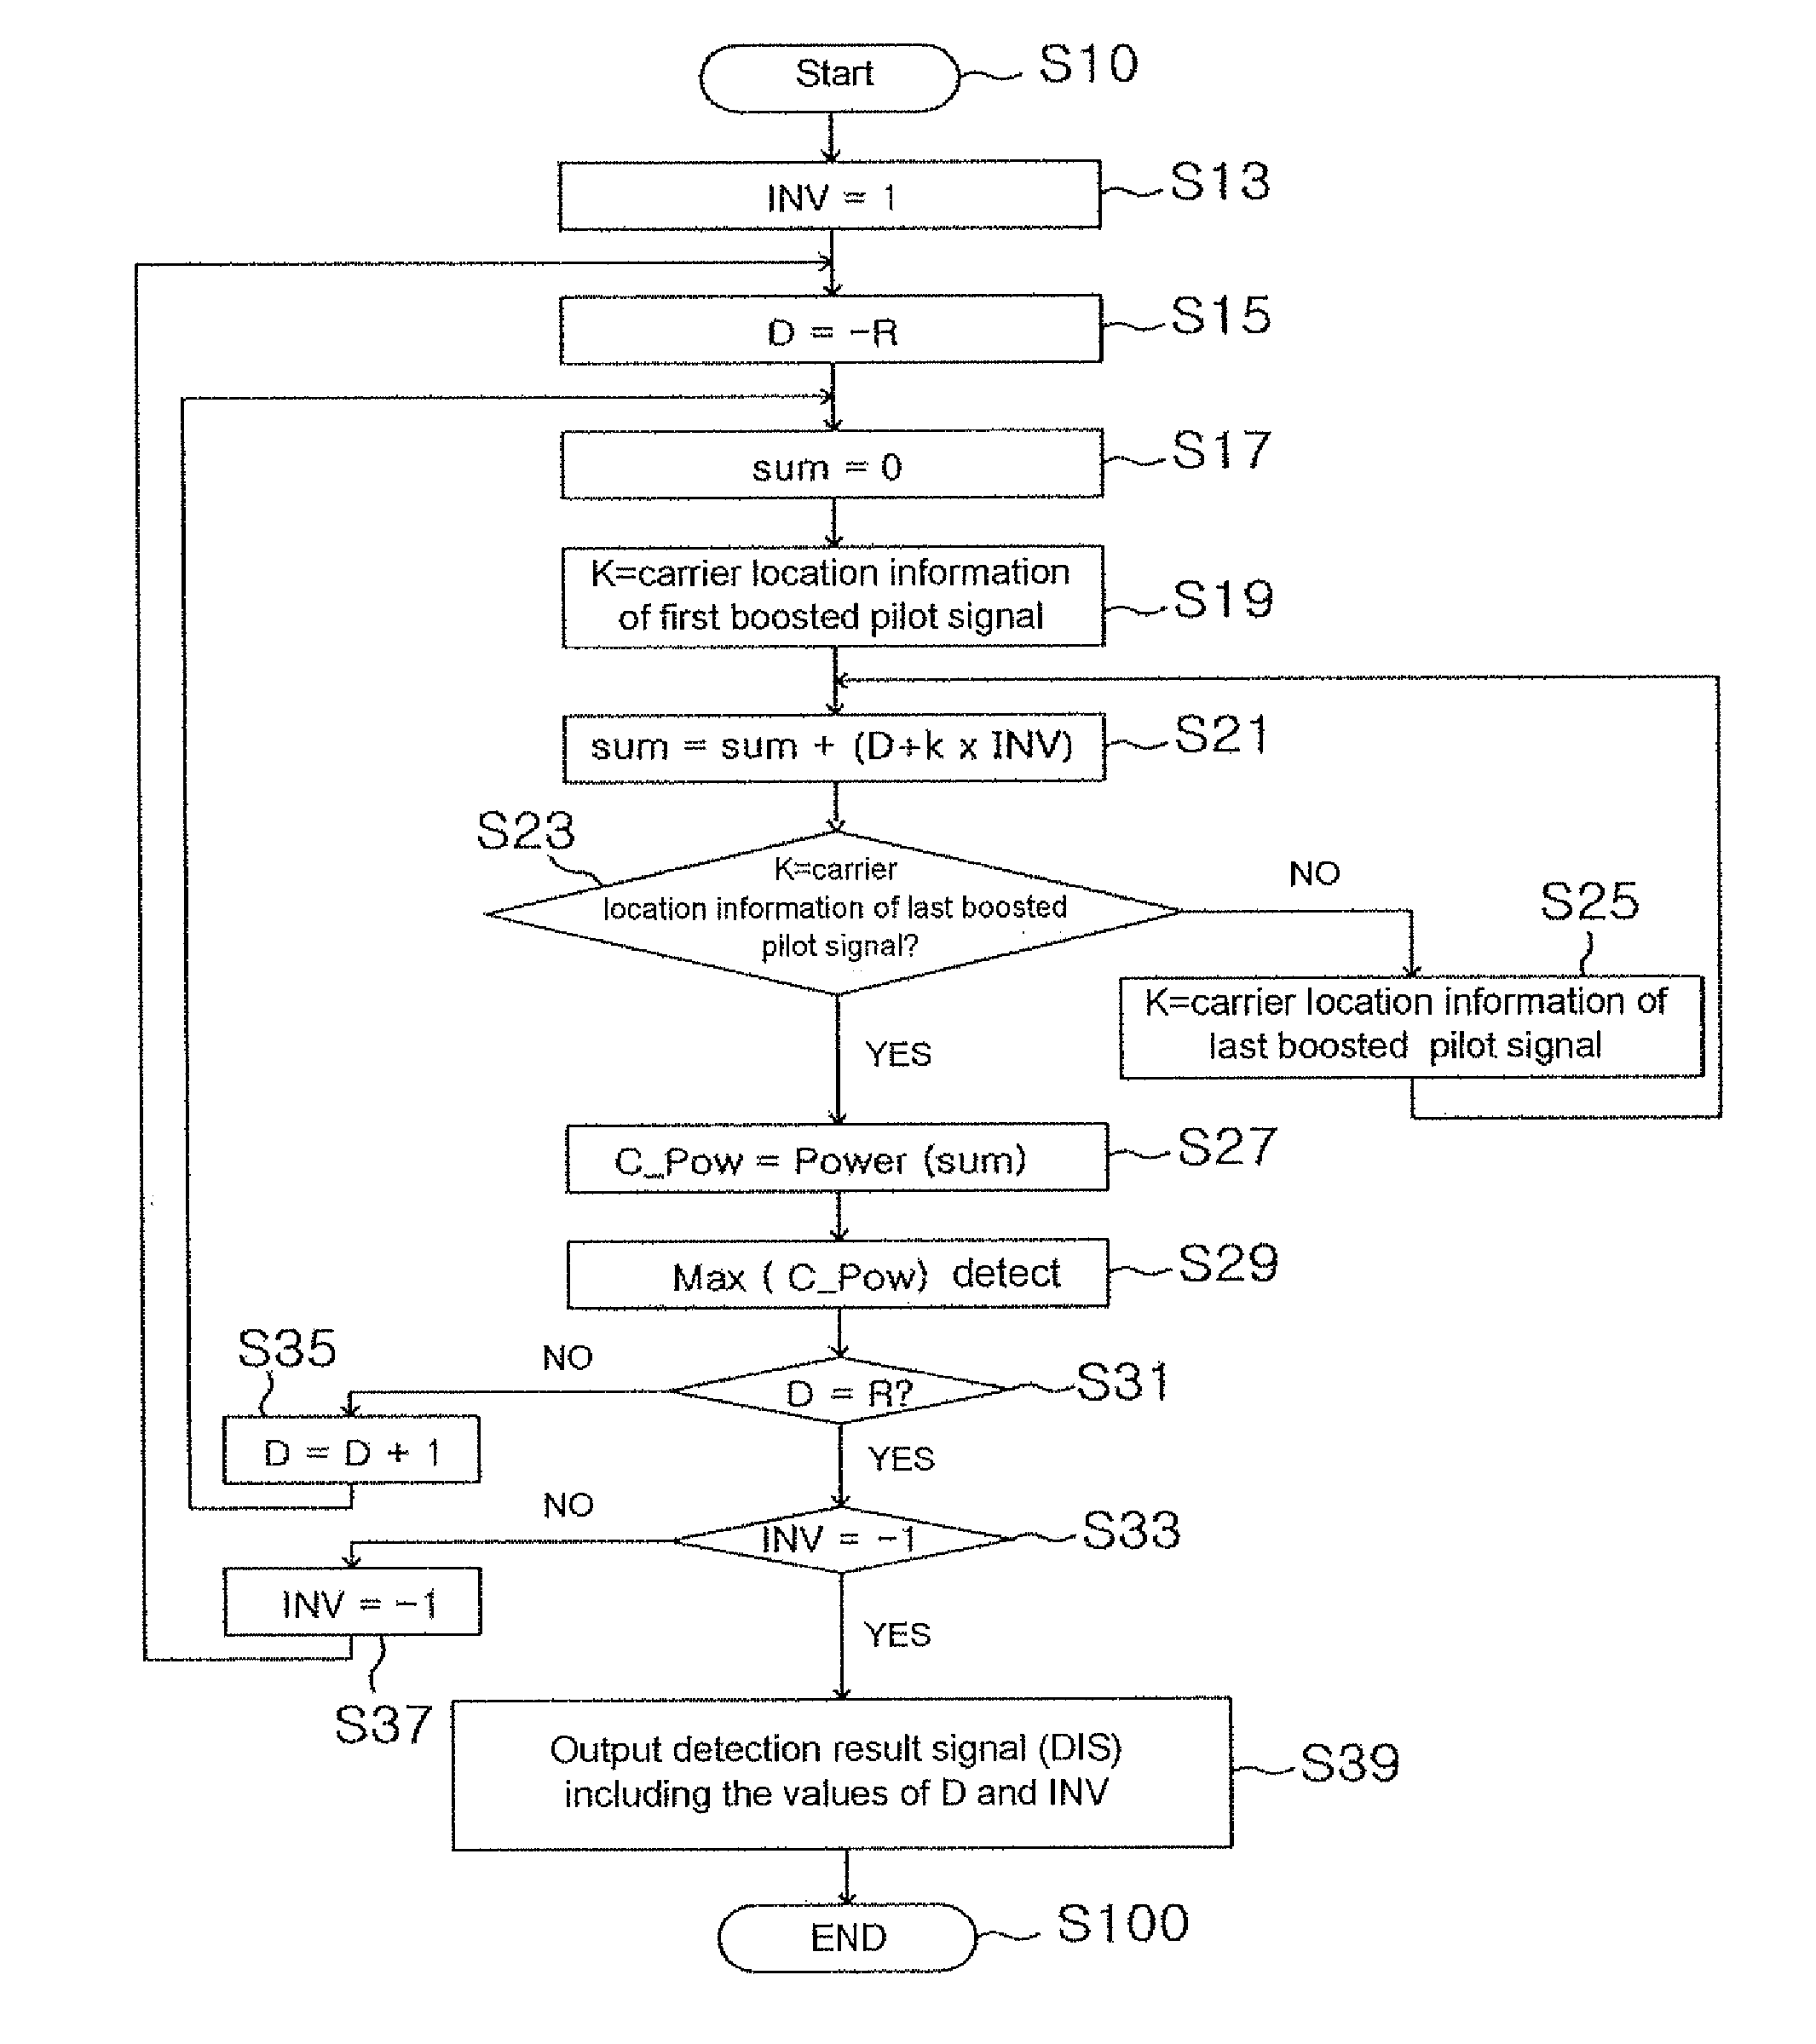 Apparatus and method for detecting spectrum inversion